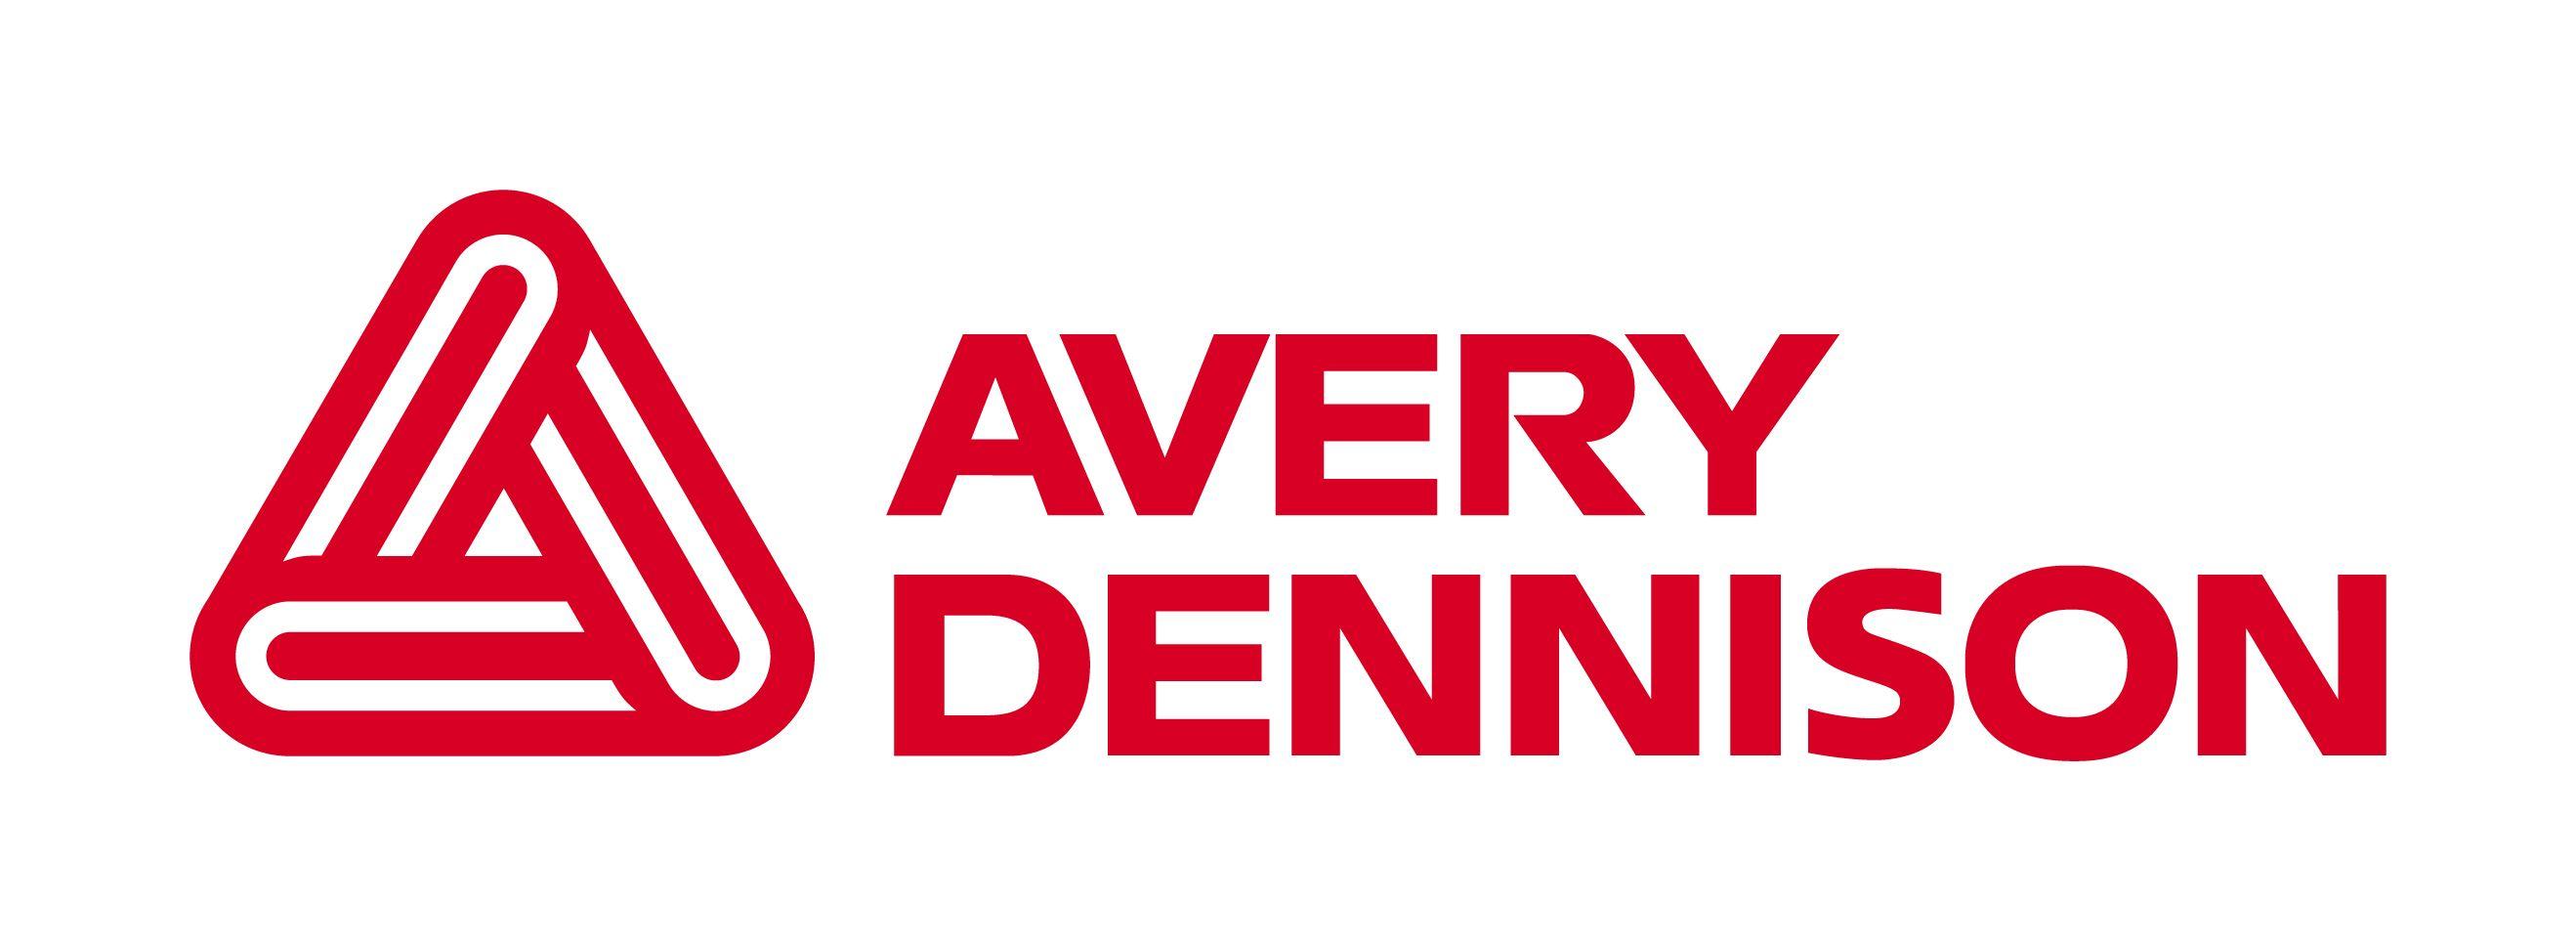 Avery Logo - AVERY DENNISON SC900 SUPERCAST